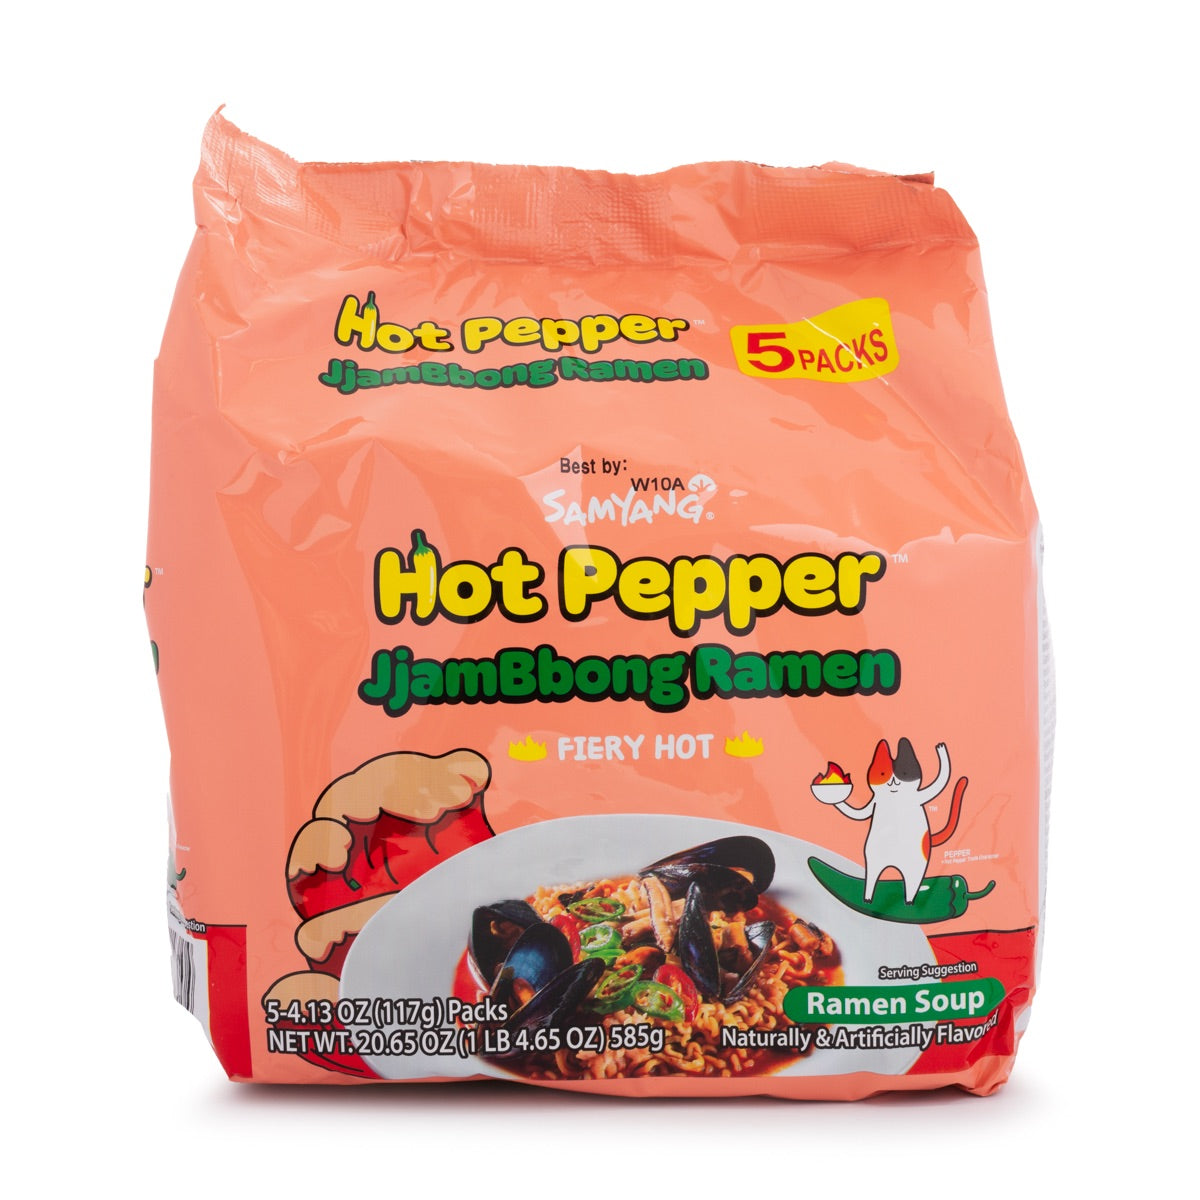 Samyang Fiery Hot Pepper JjamBbong Ramen - 5 Packs